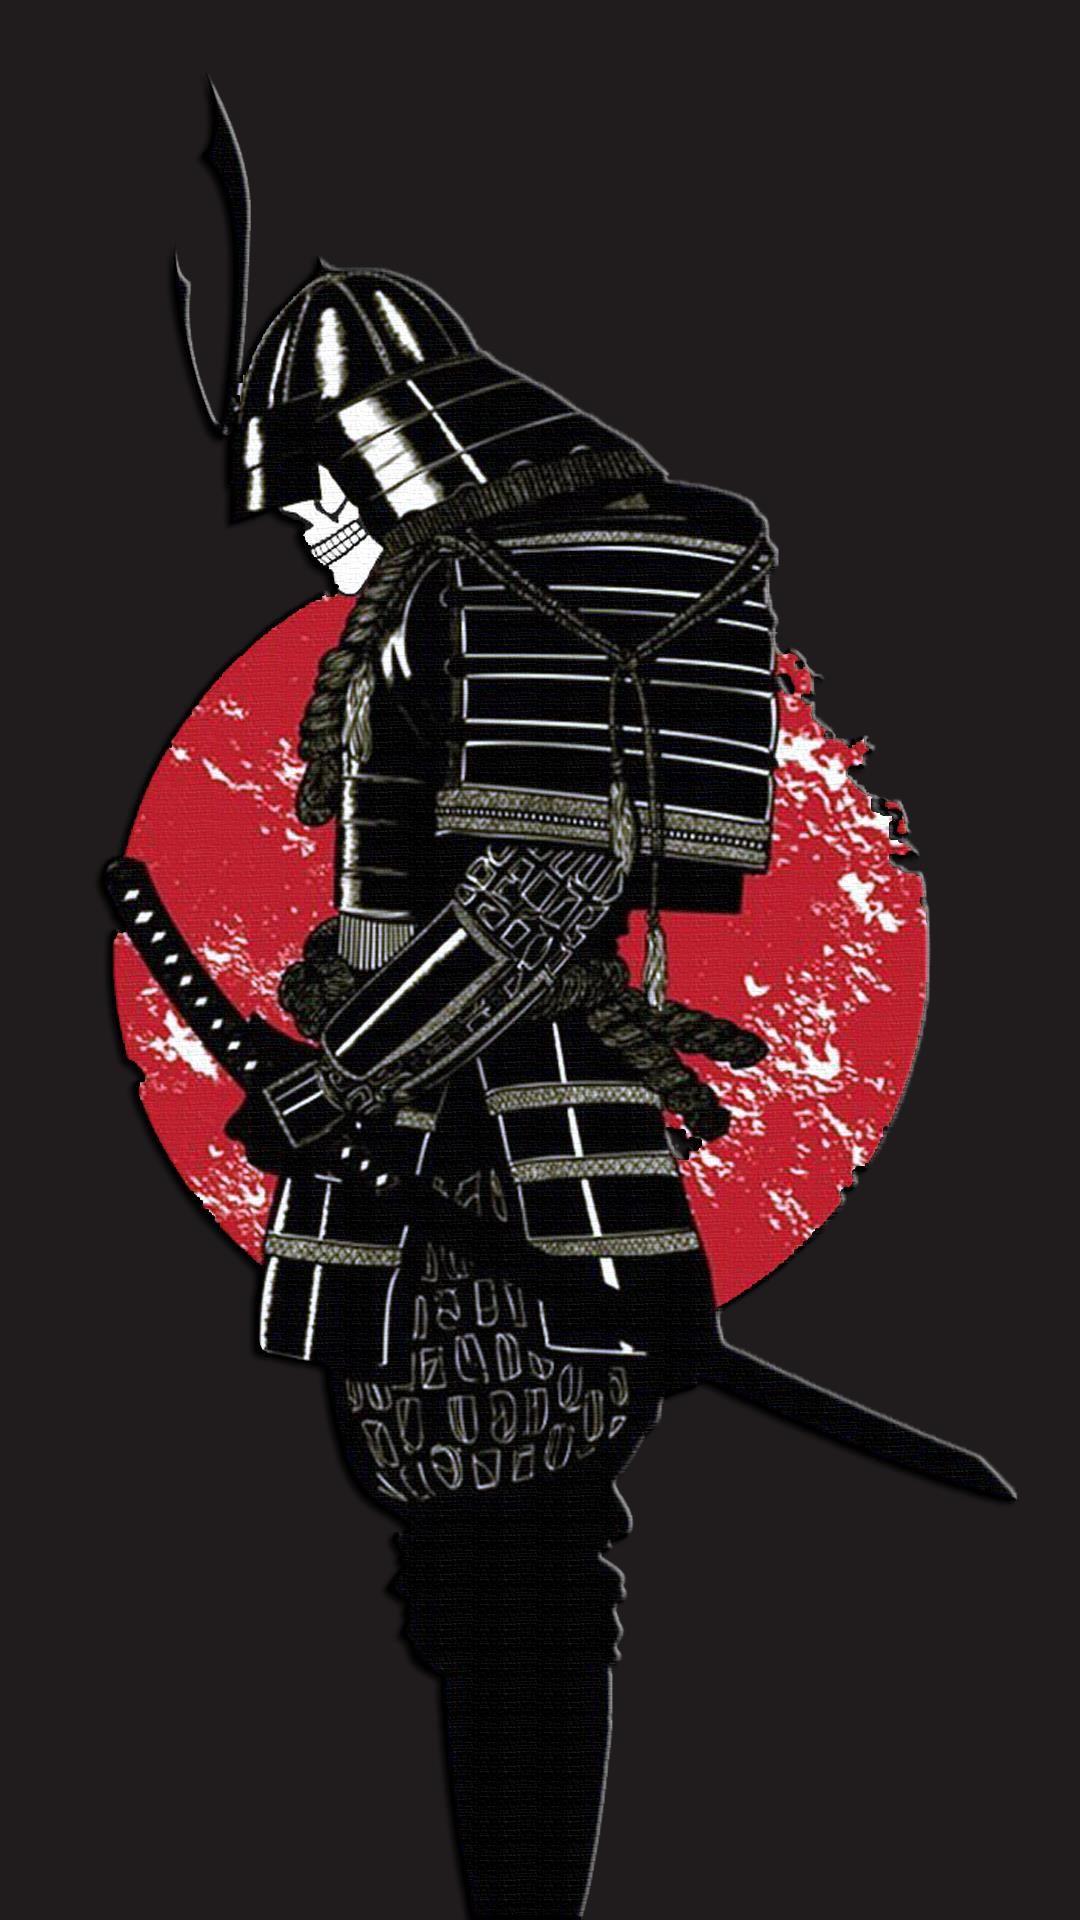 Samurai wallpaper for your phone - Samurai